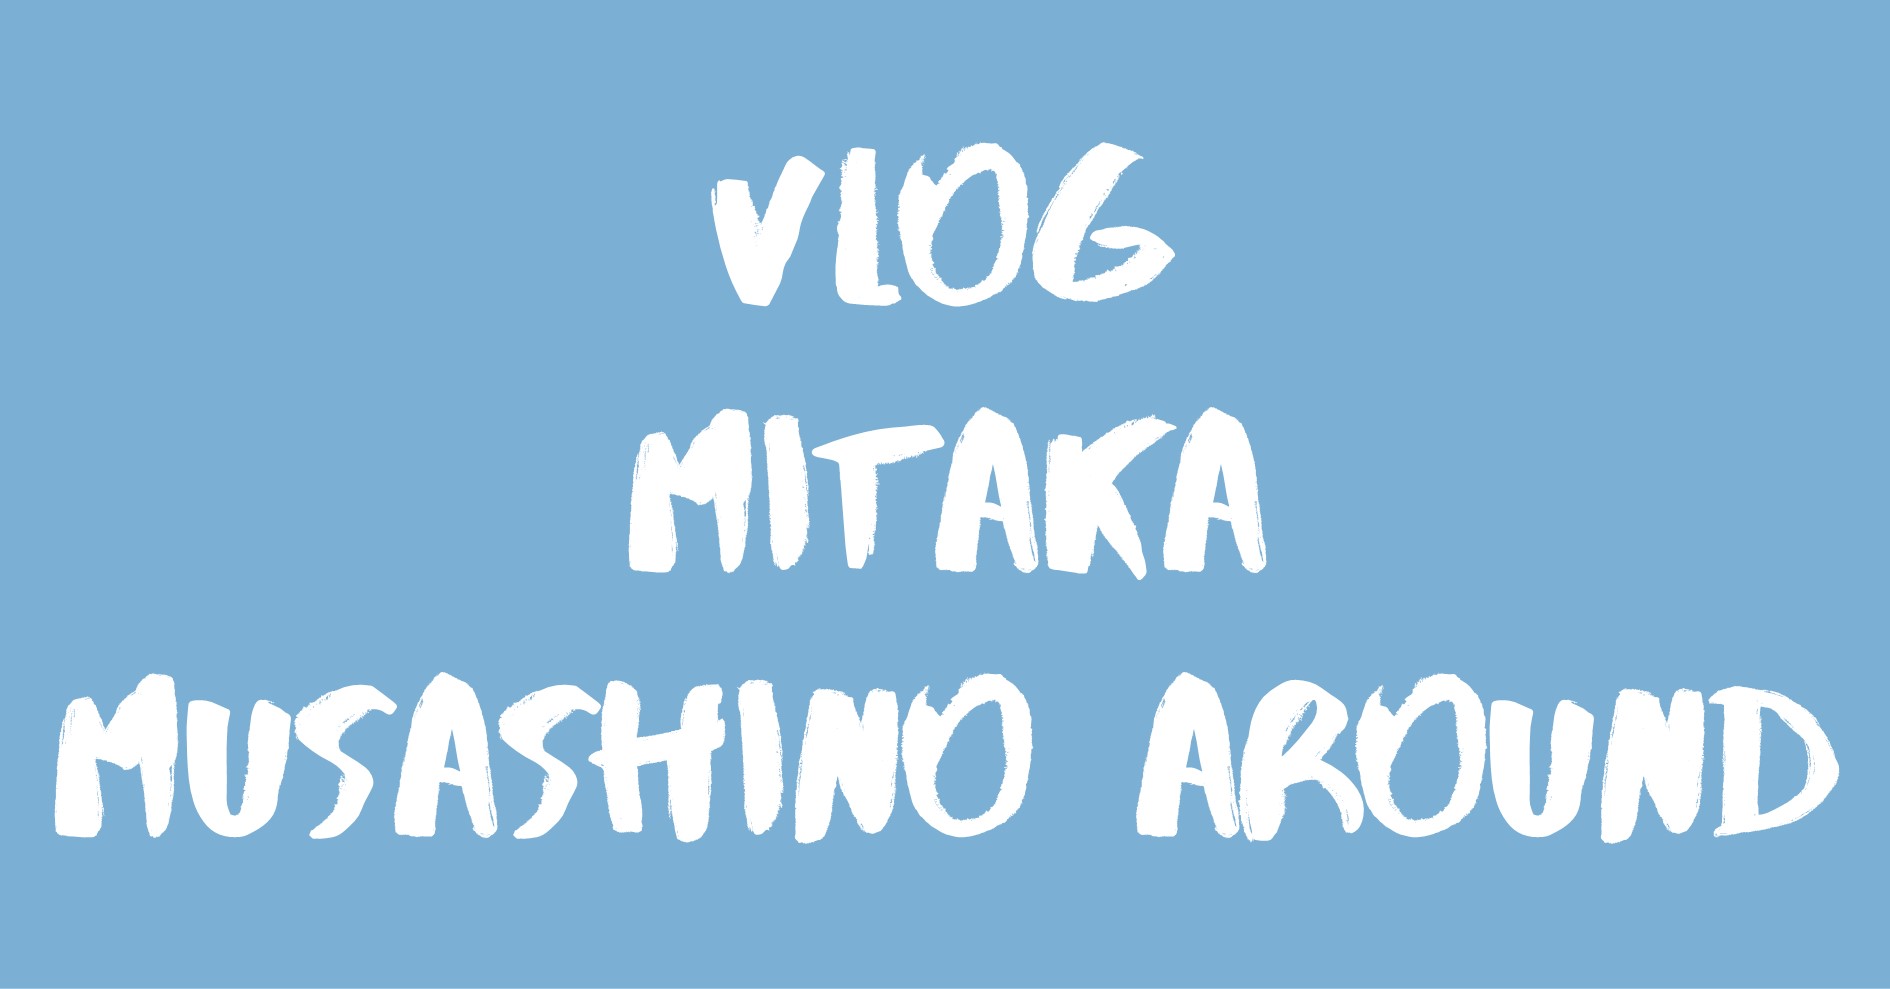 Vlog Mitaka, Musashino & Around